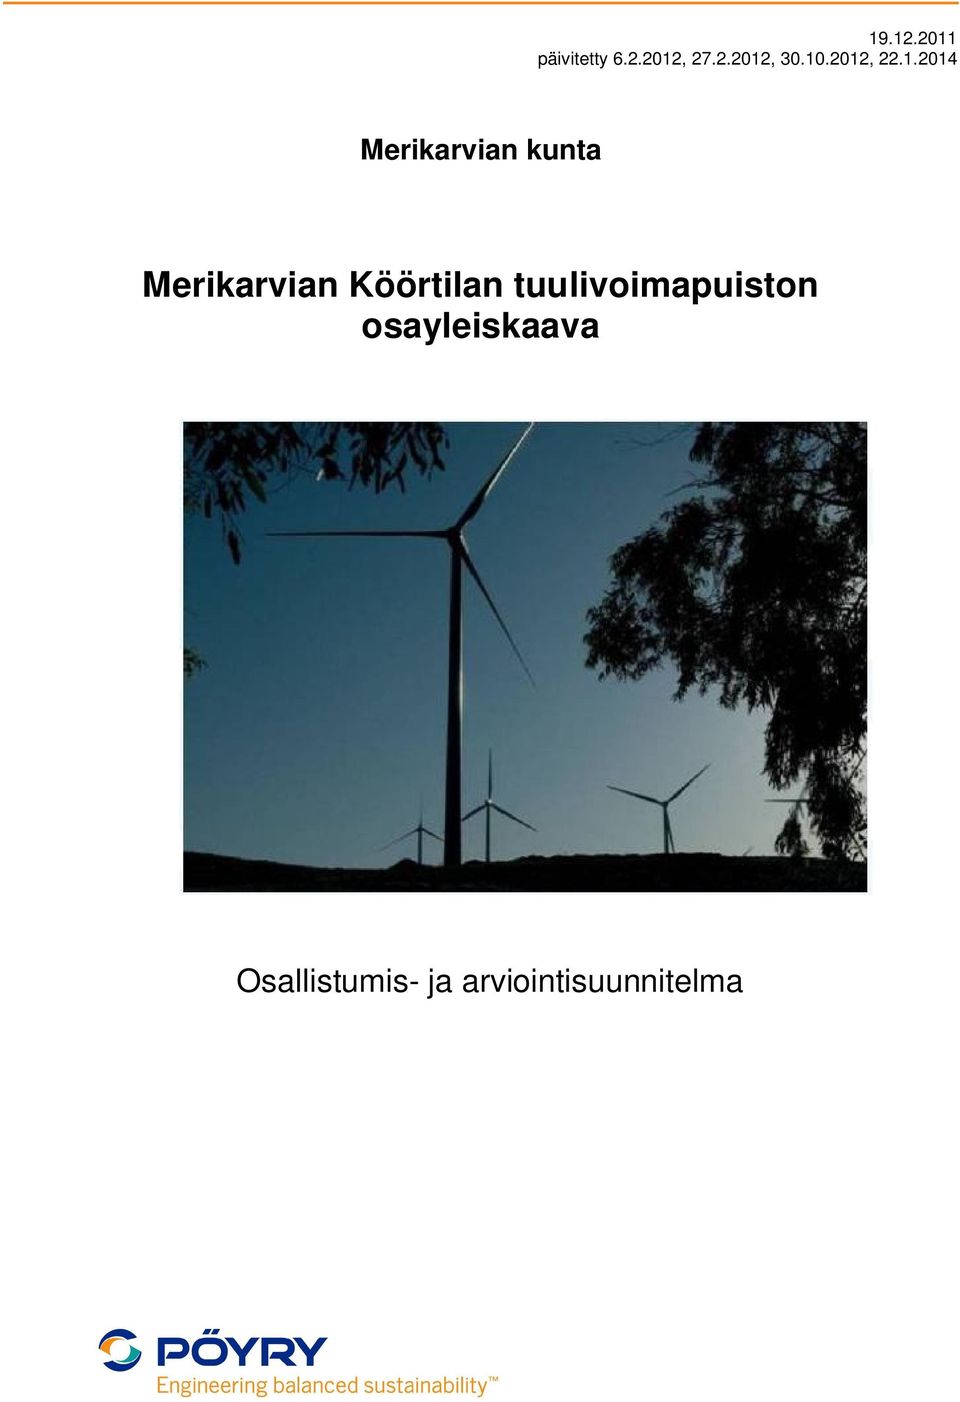 2012, Merikarvian kunta